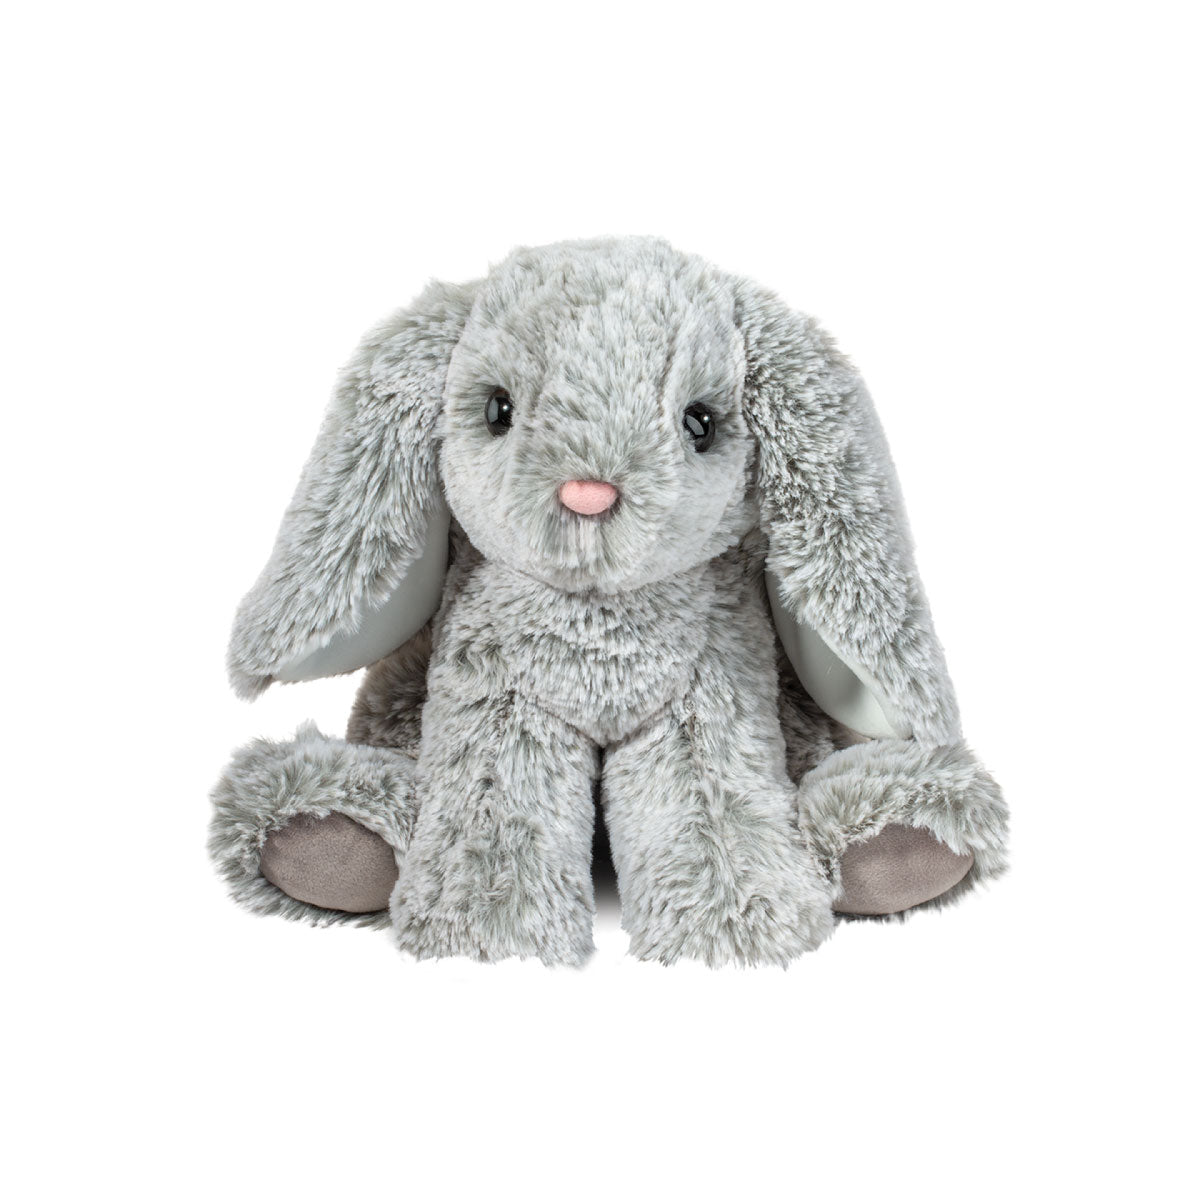 Softie - Stormie the Gray Bunny from Douglas